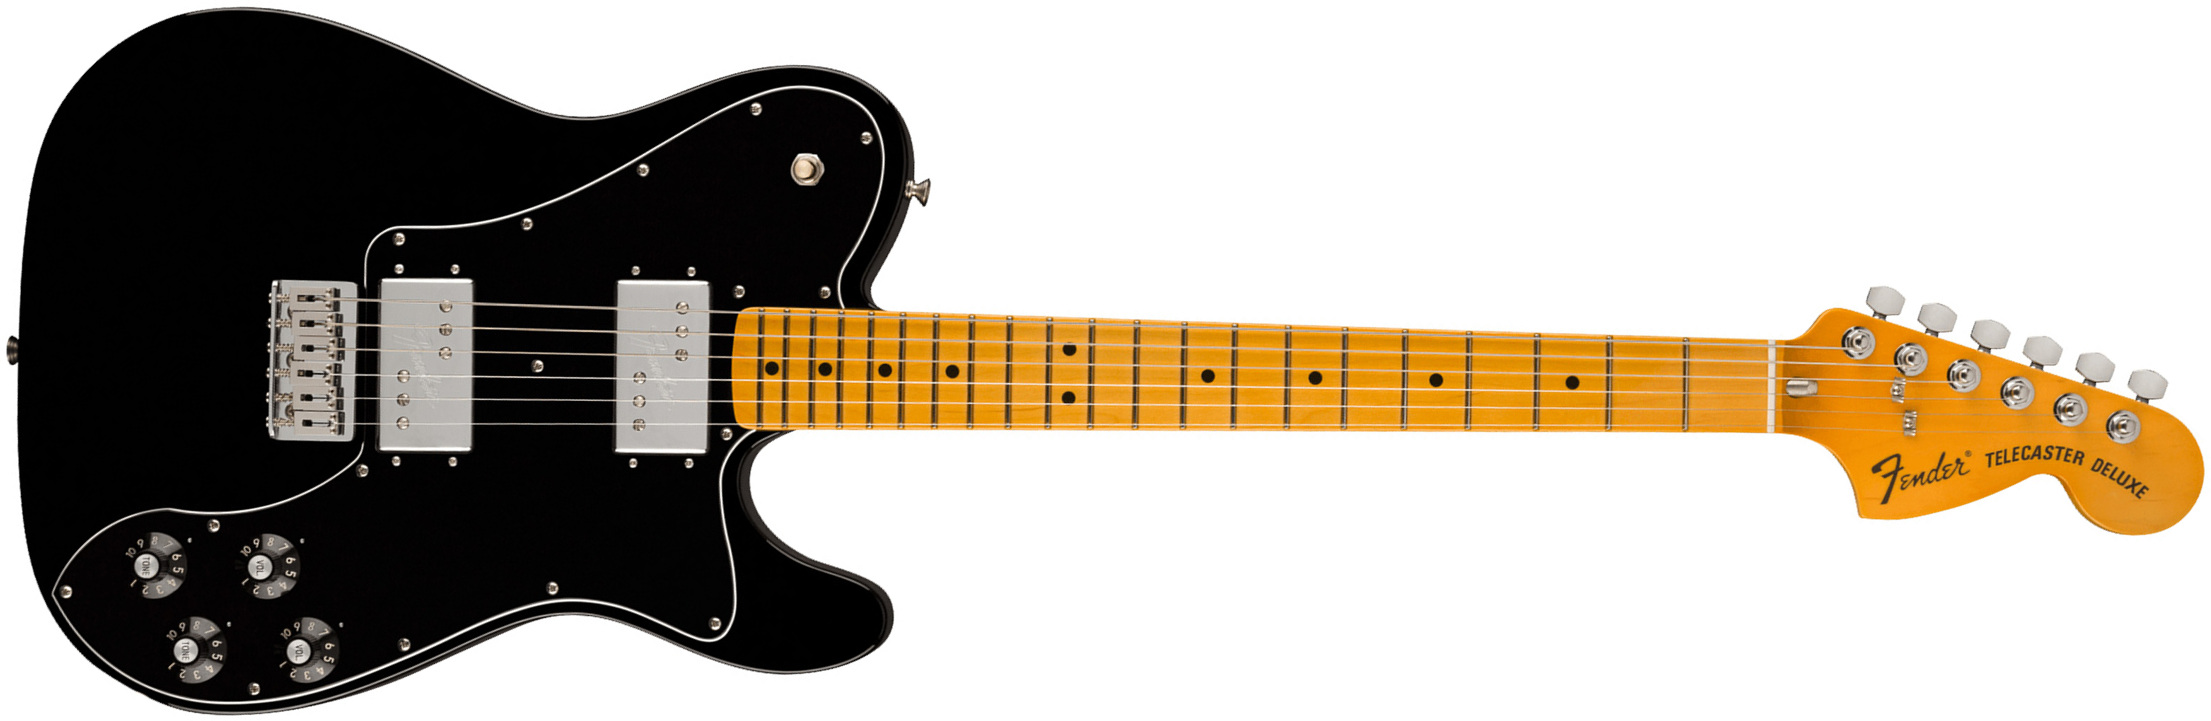 Fender Tele Deluxe 1975 American Vintage Ii Usa 2h Ht Mn - Black - Guitarra eléctrica con forma de tel - Main picture